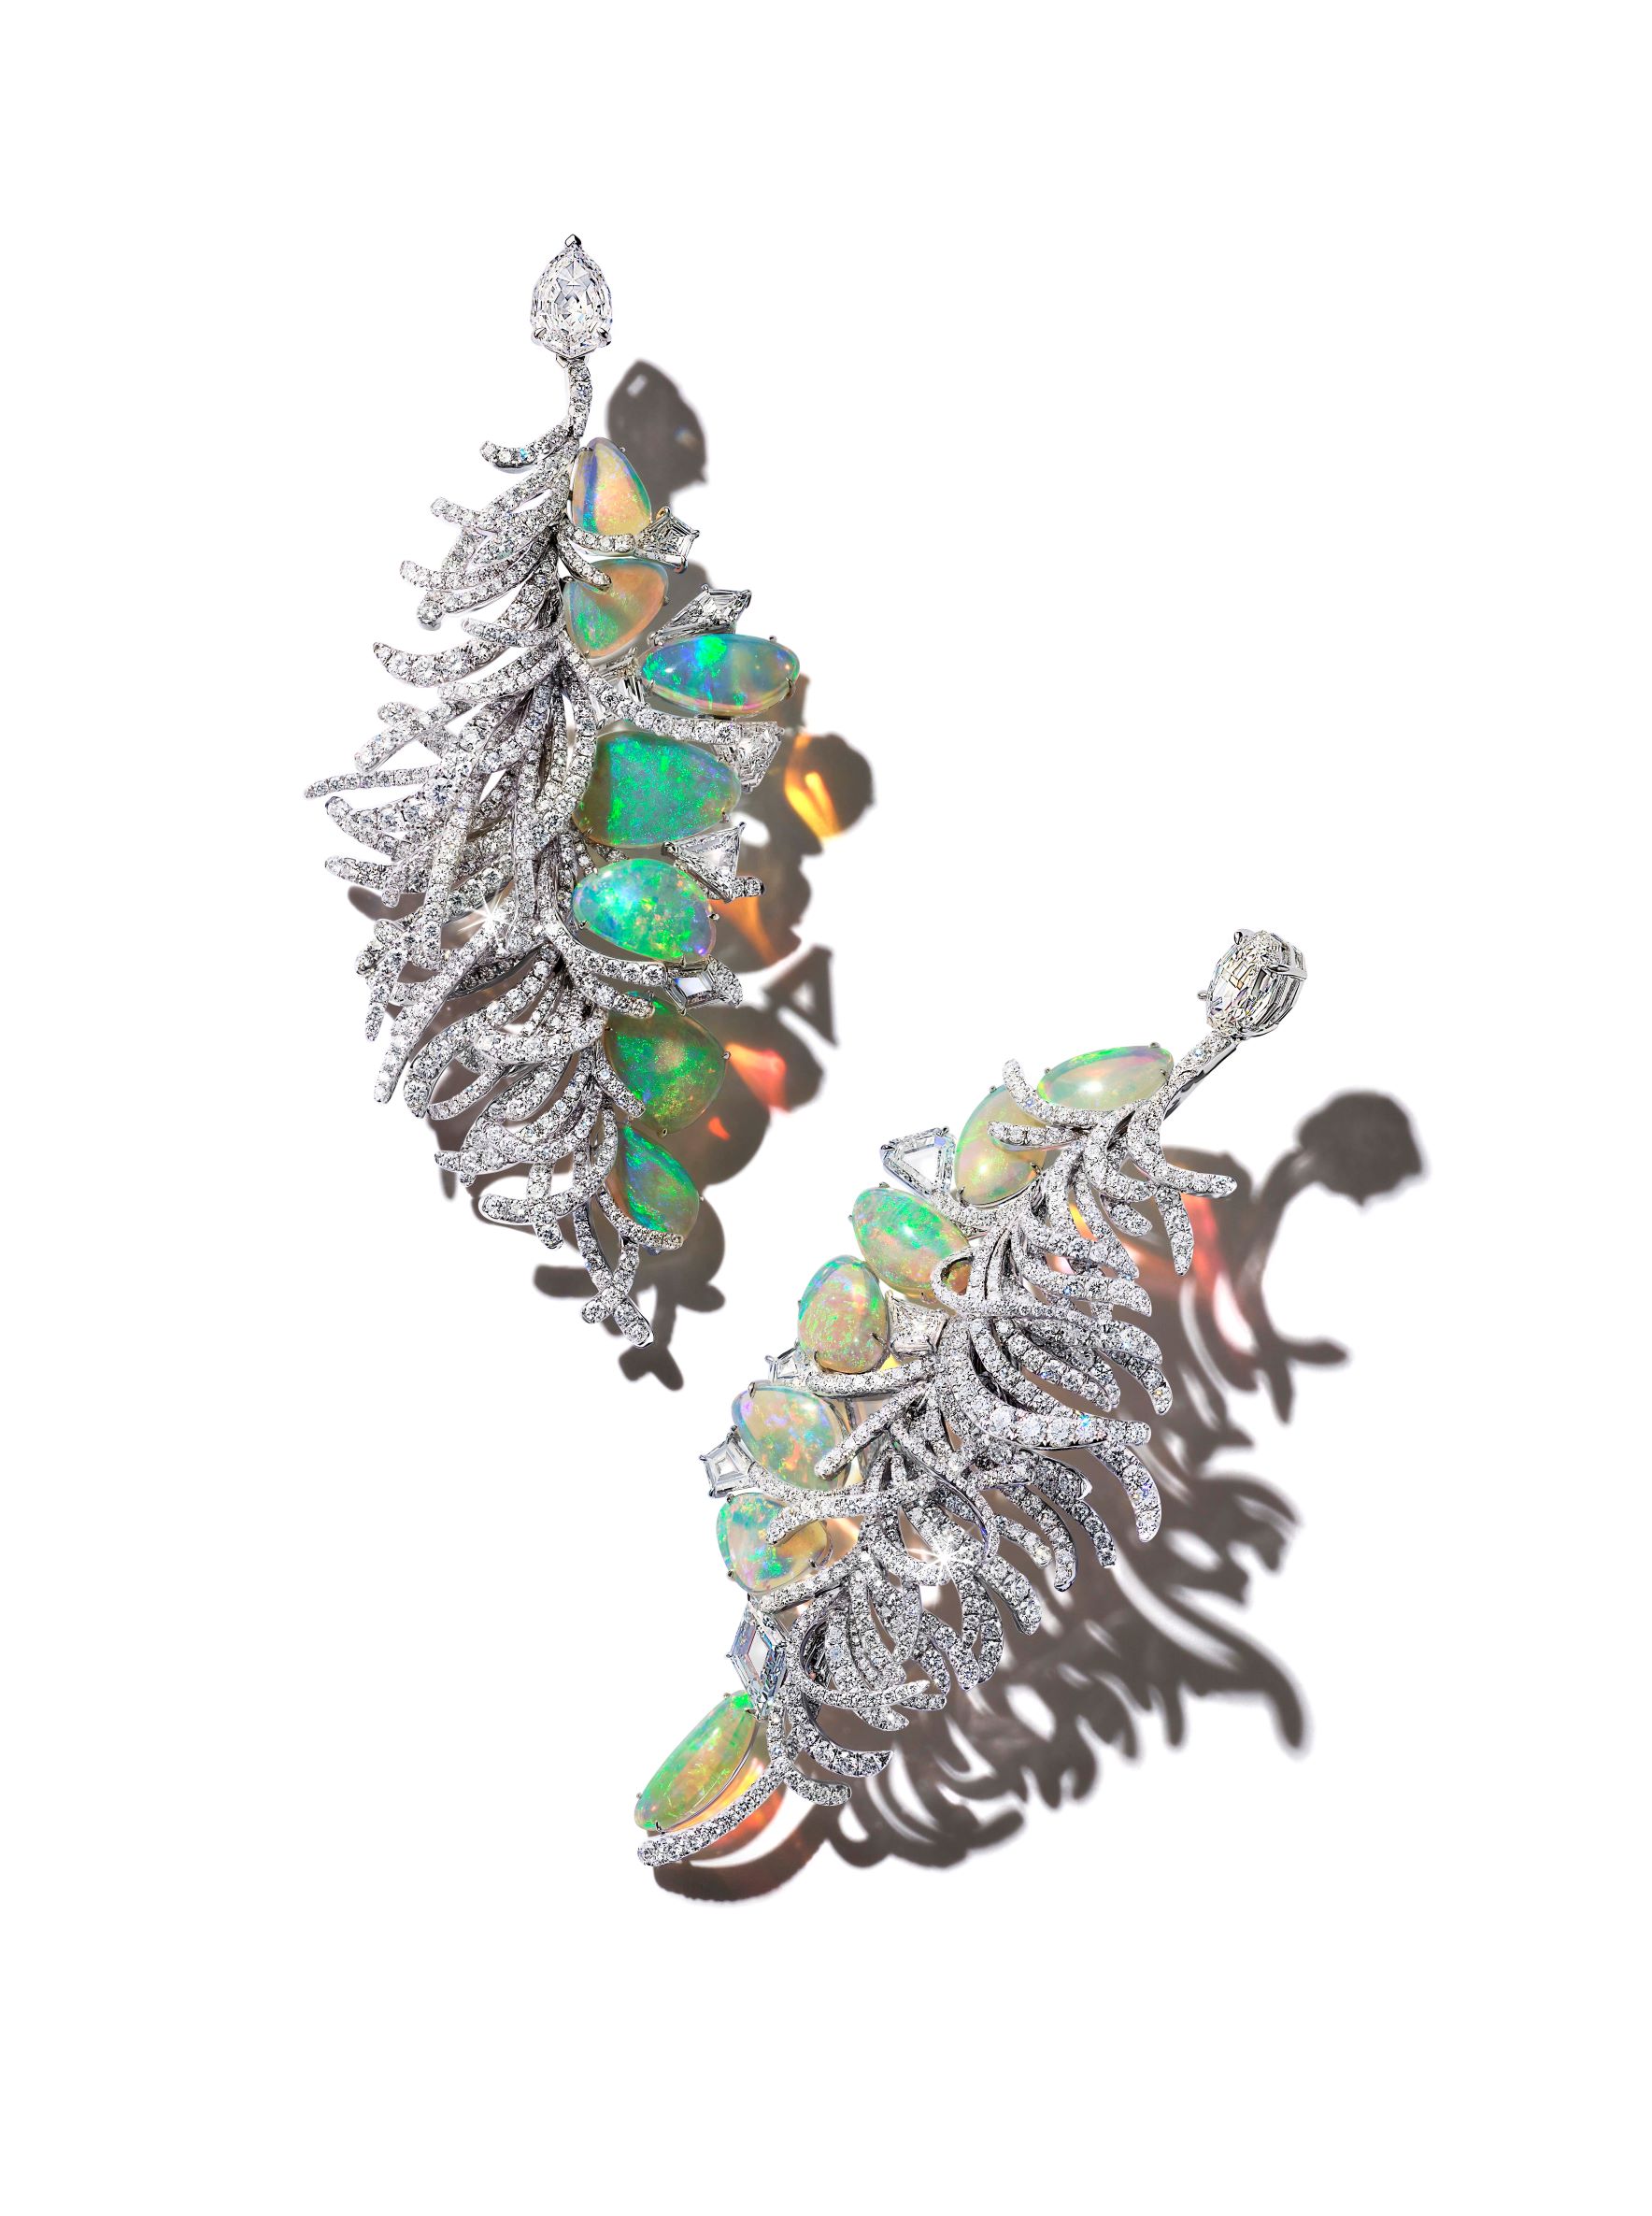 Flying Leaf Earrings: Diamonds, Opals. Image Courtesy of Feng J